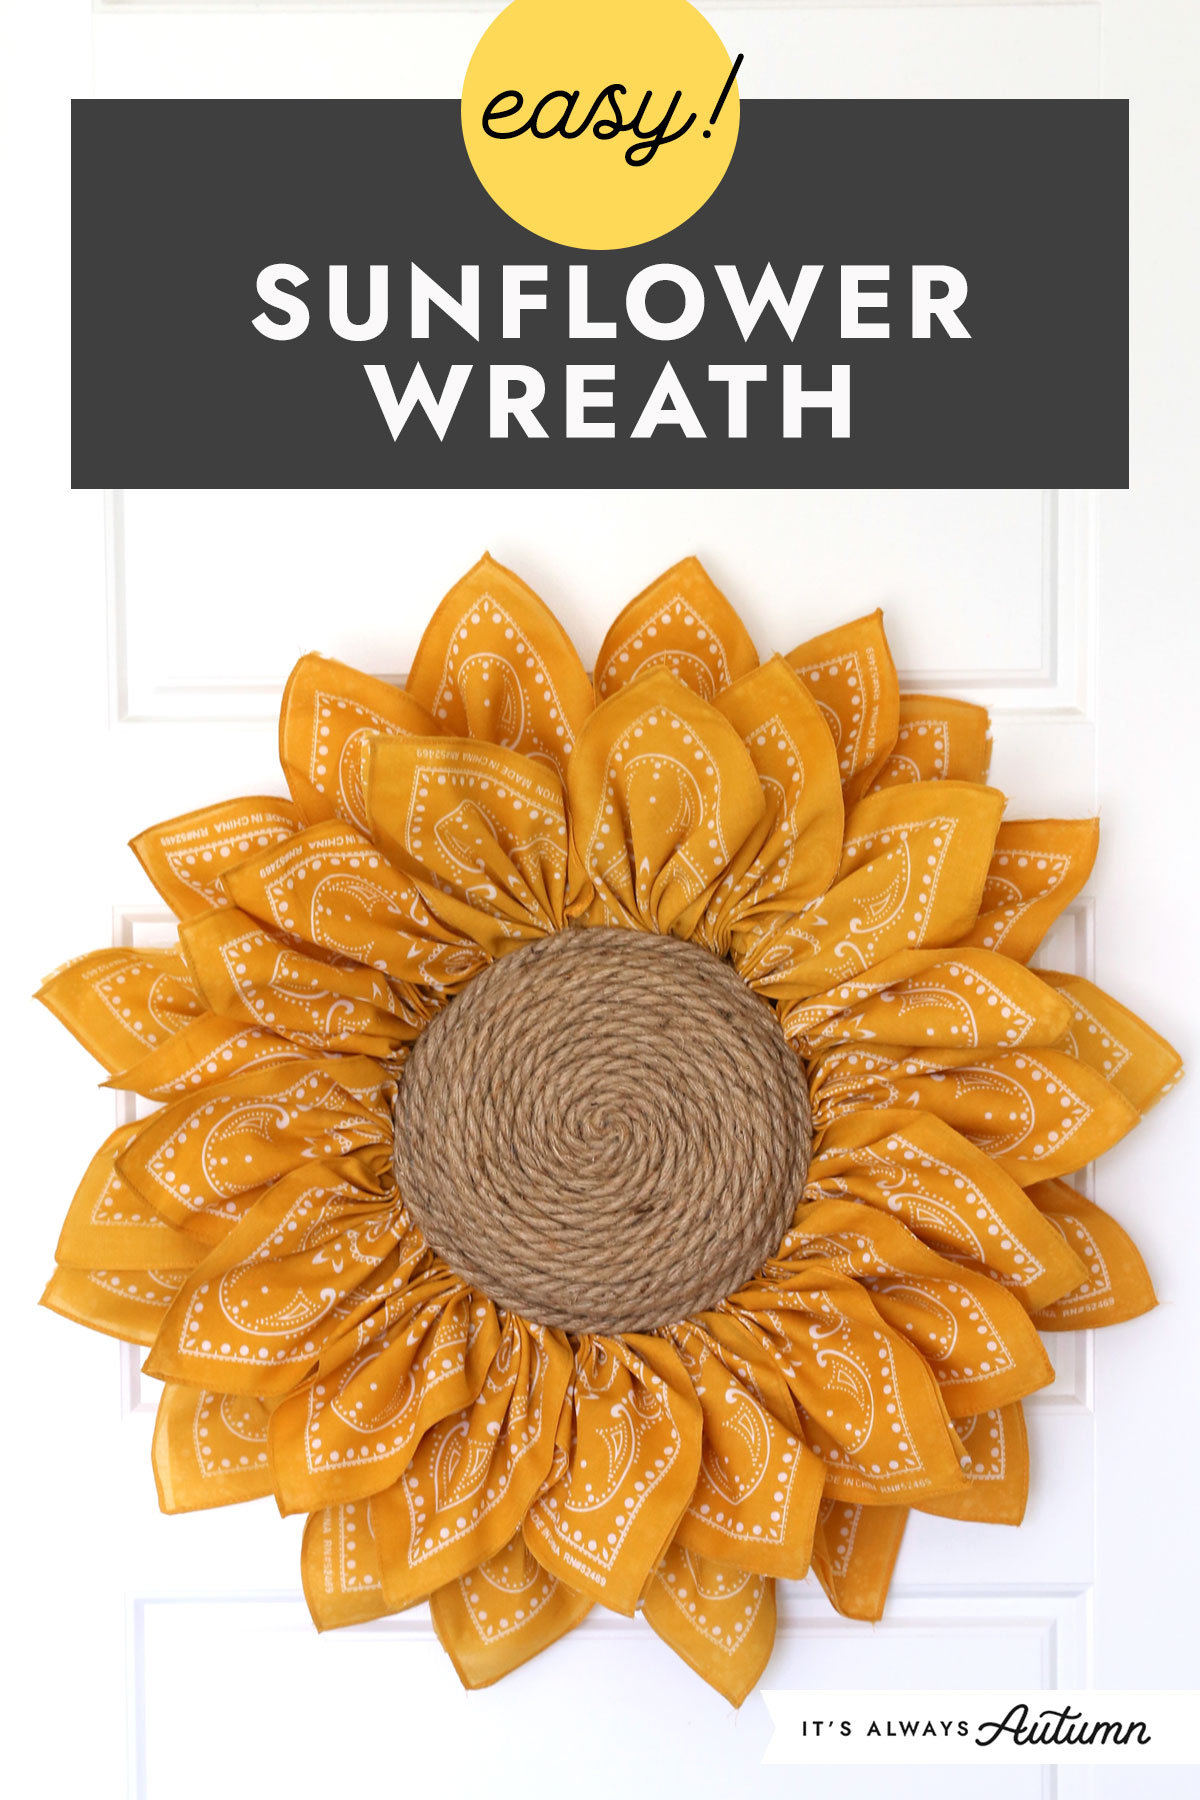 Easy! Sunflower wreath.